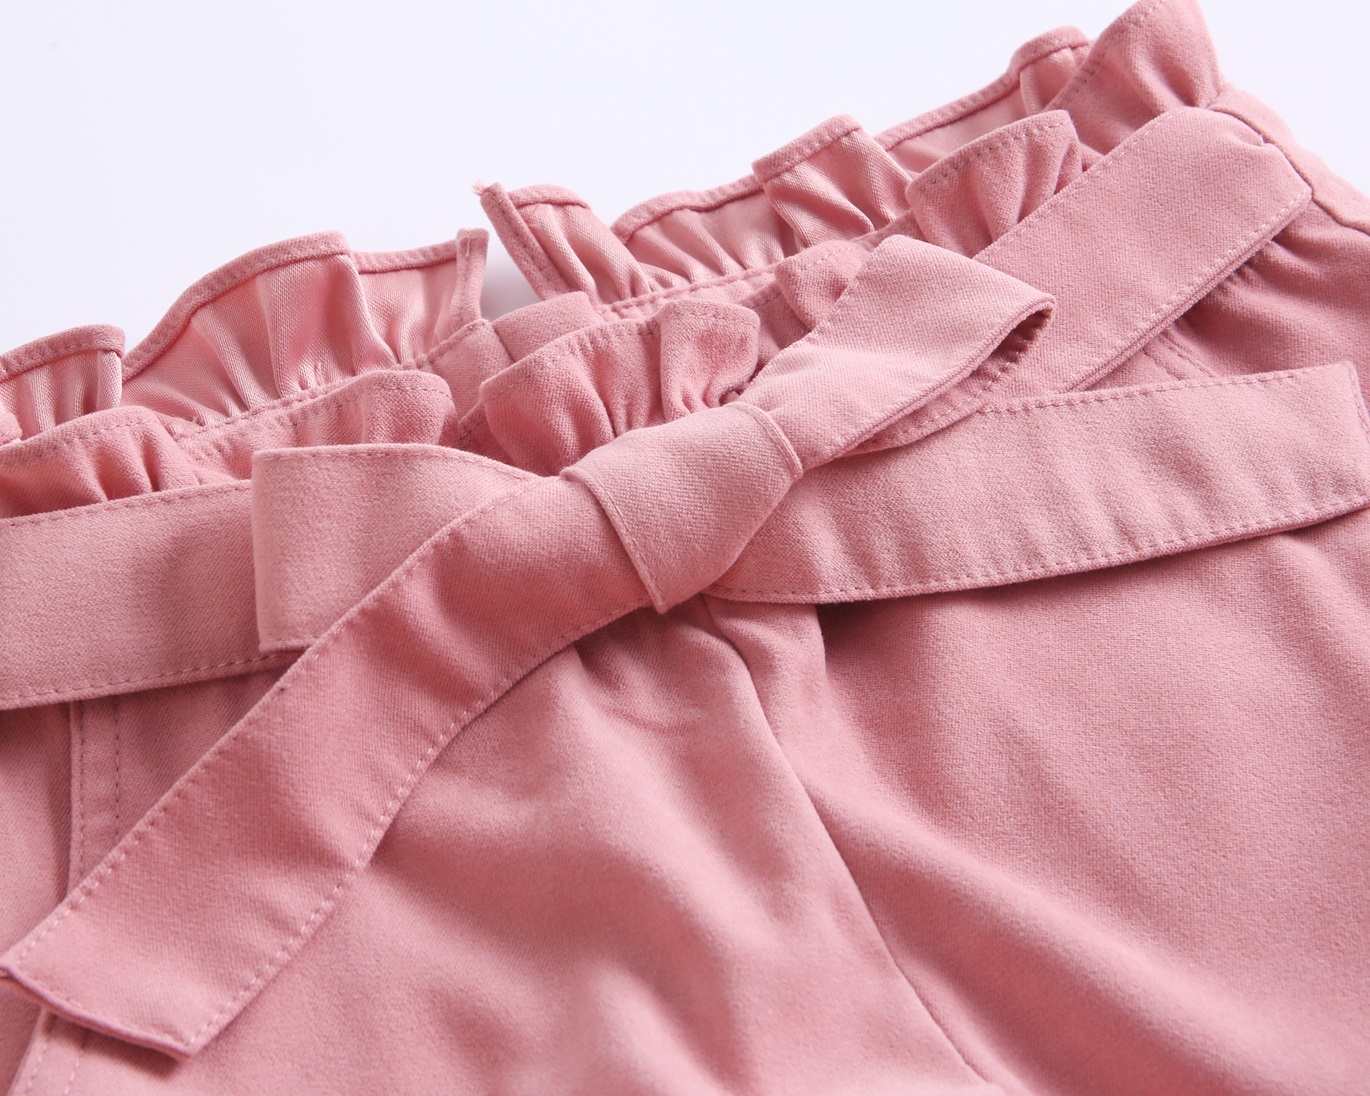 Imagen de pantalon rosa palazzo 